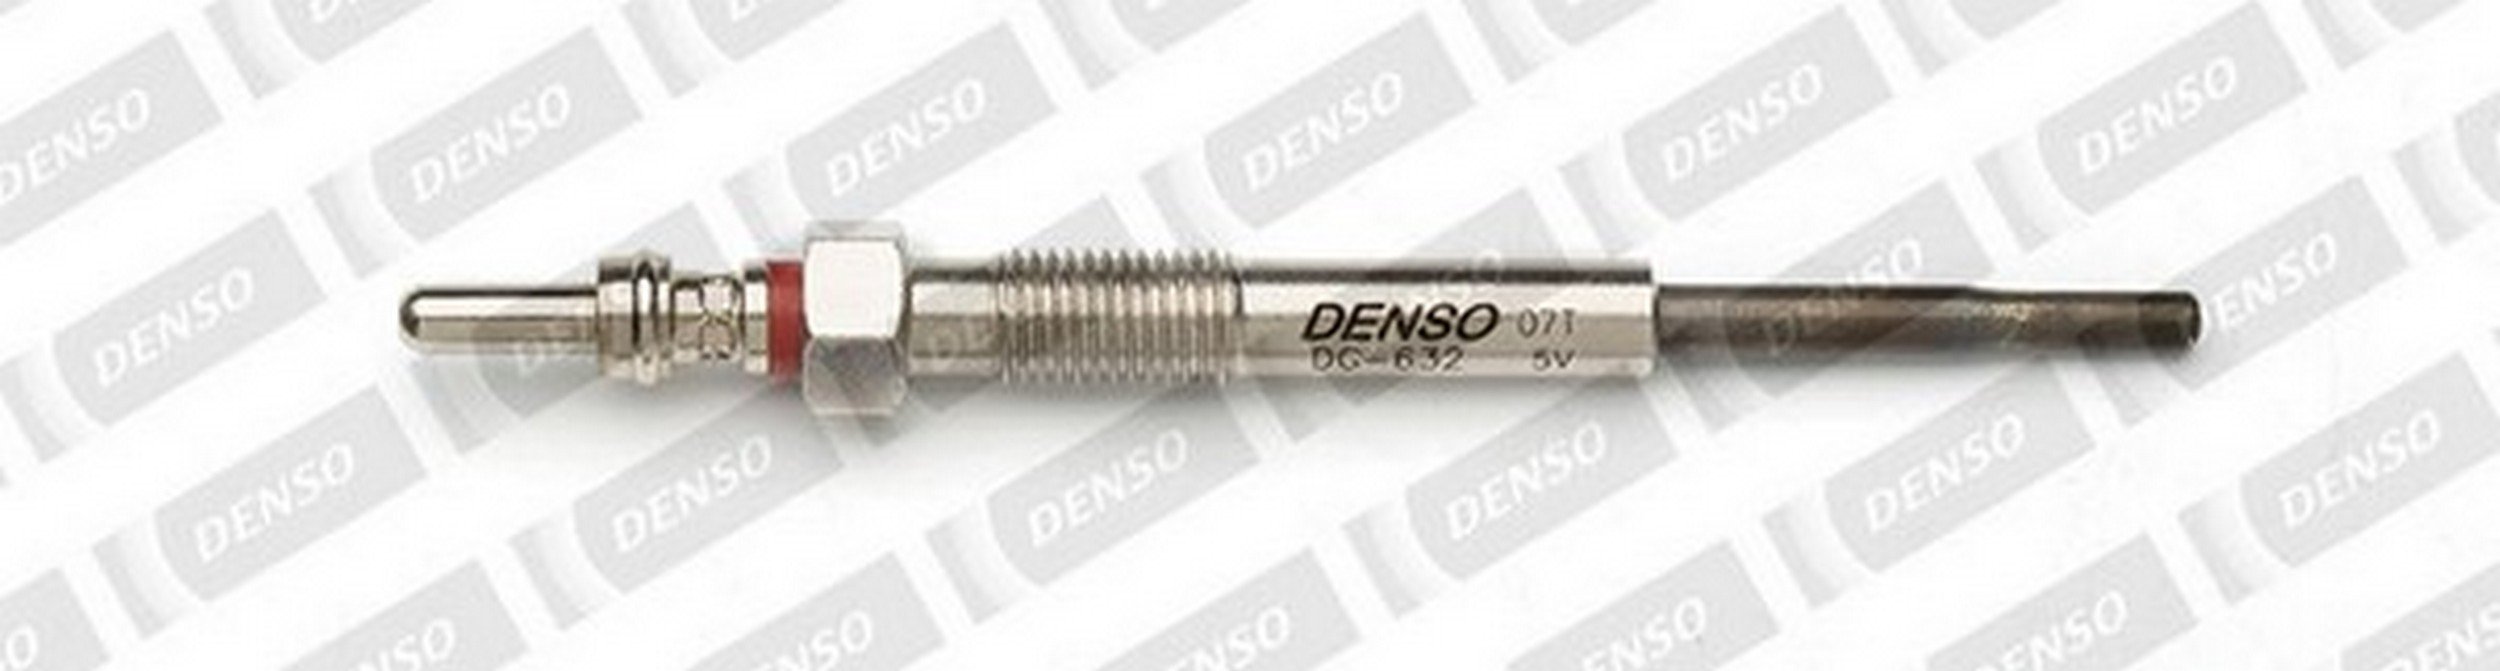 DENSO-AU DG-632